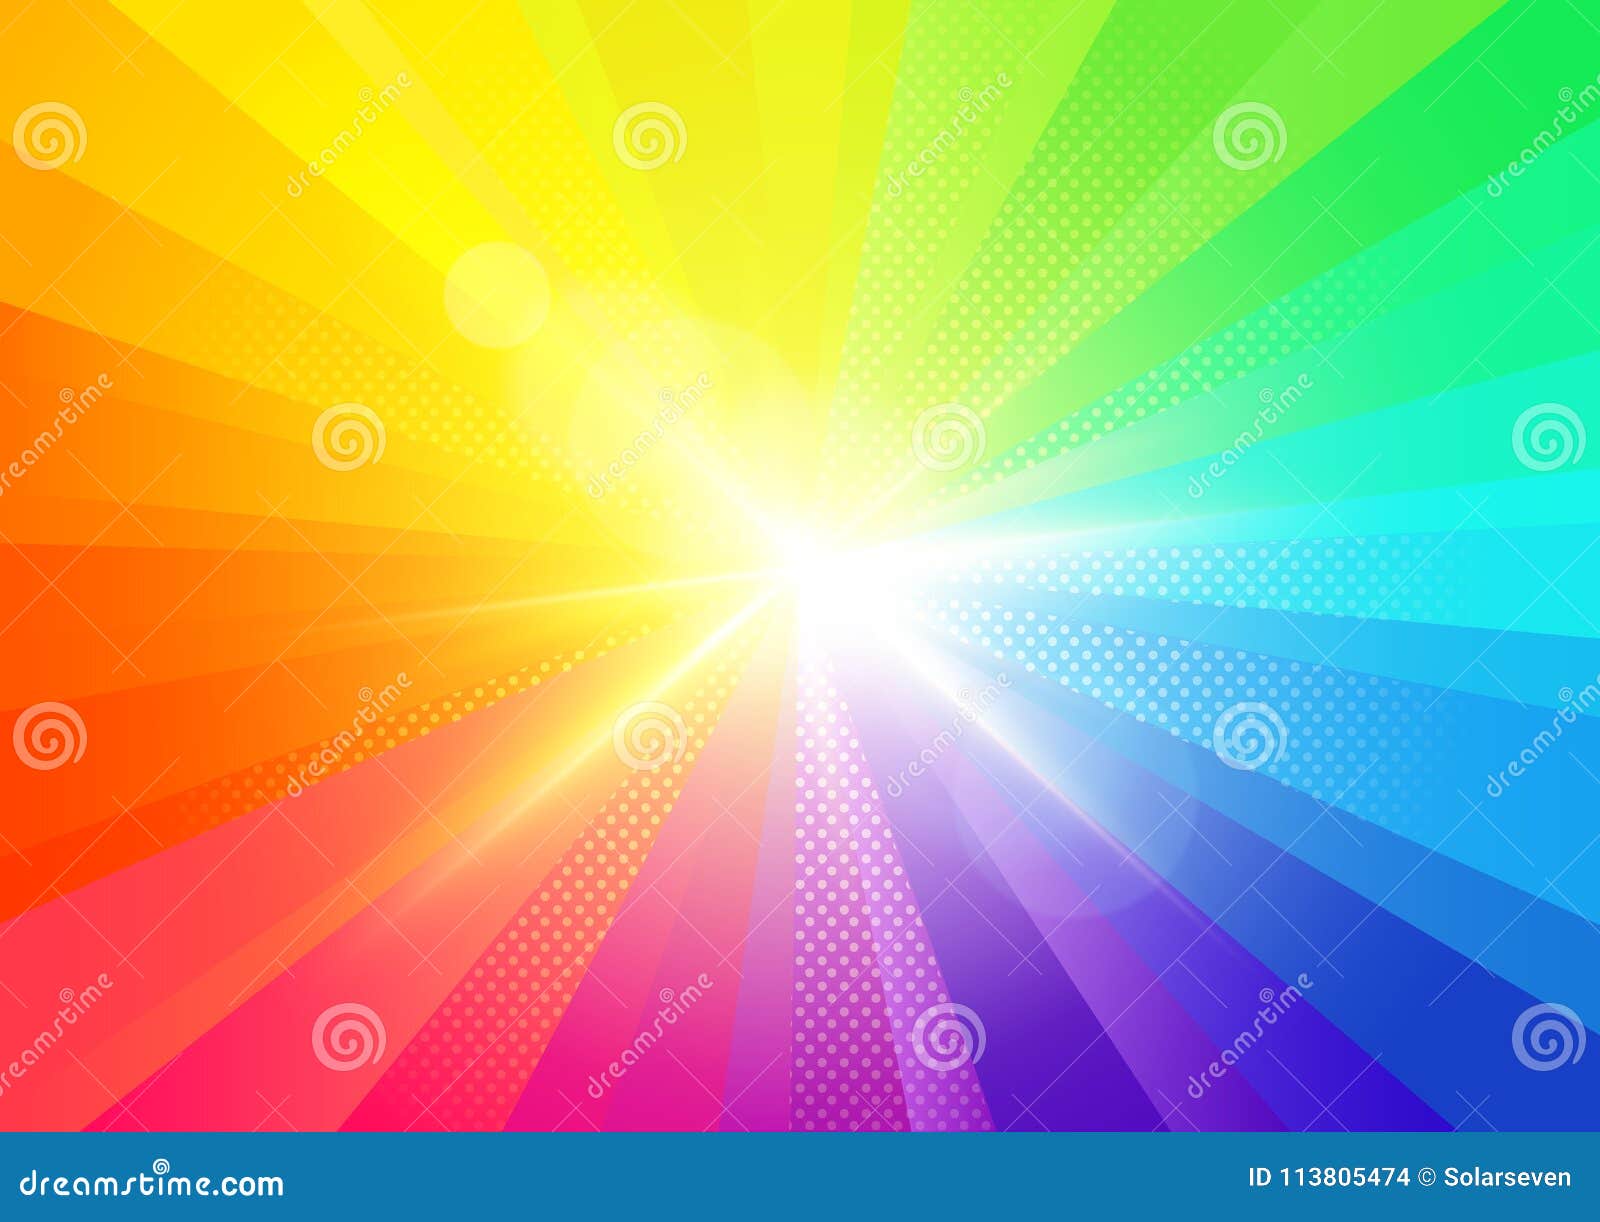 rainbow burst rays background